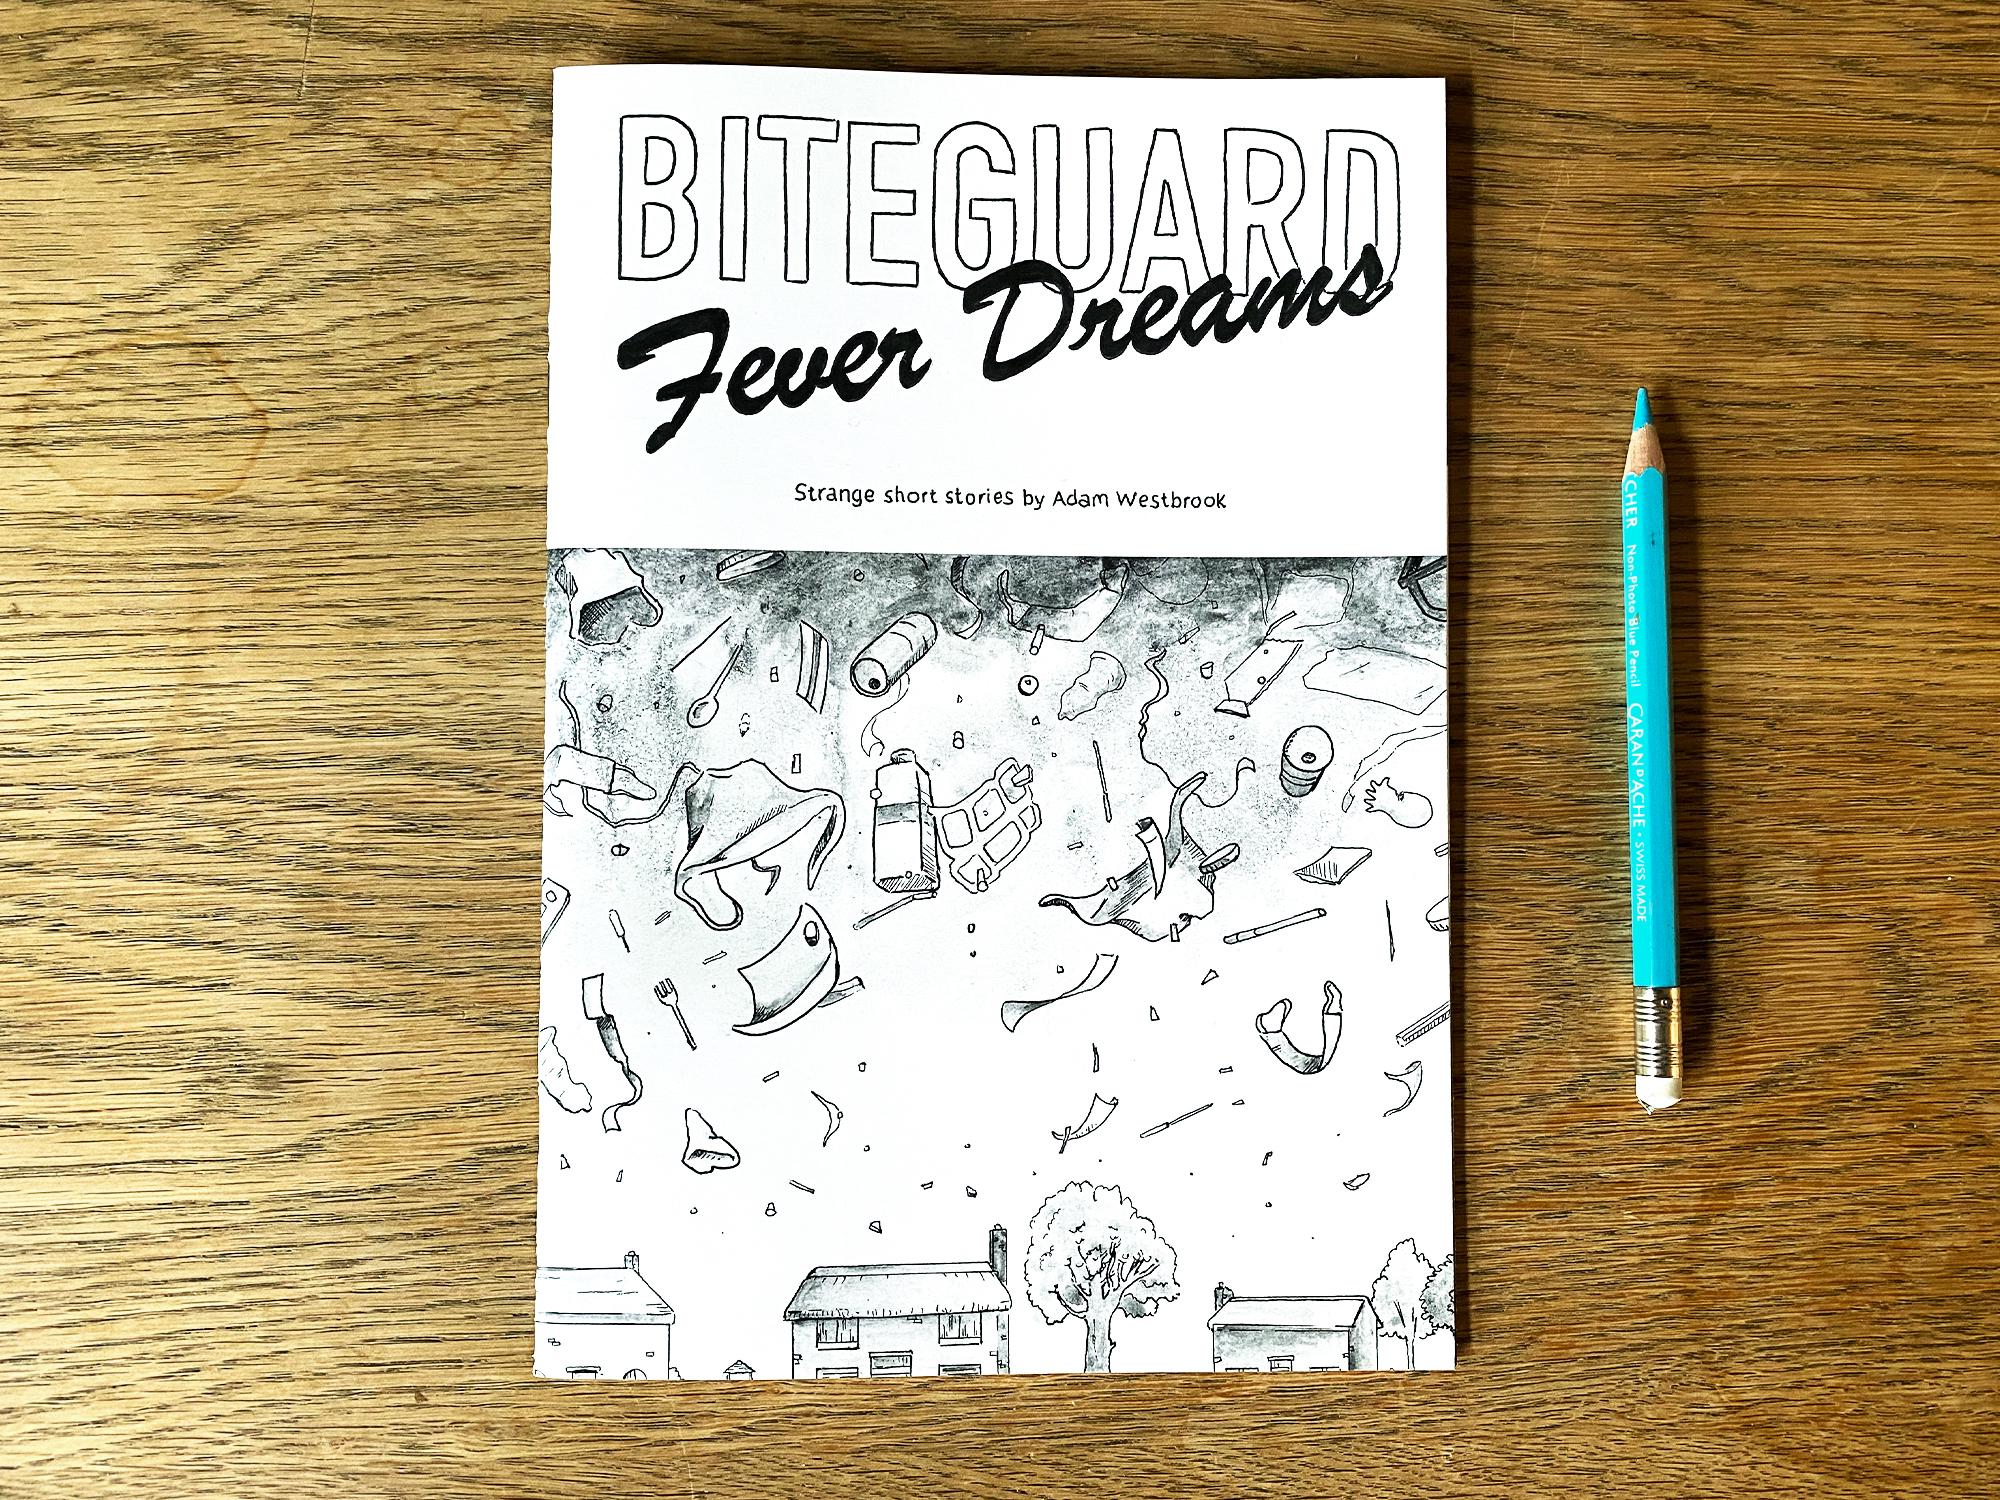 A copy of Biteguard Fever Dreams by Adam Westbrook